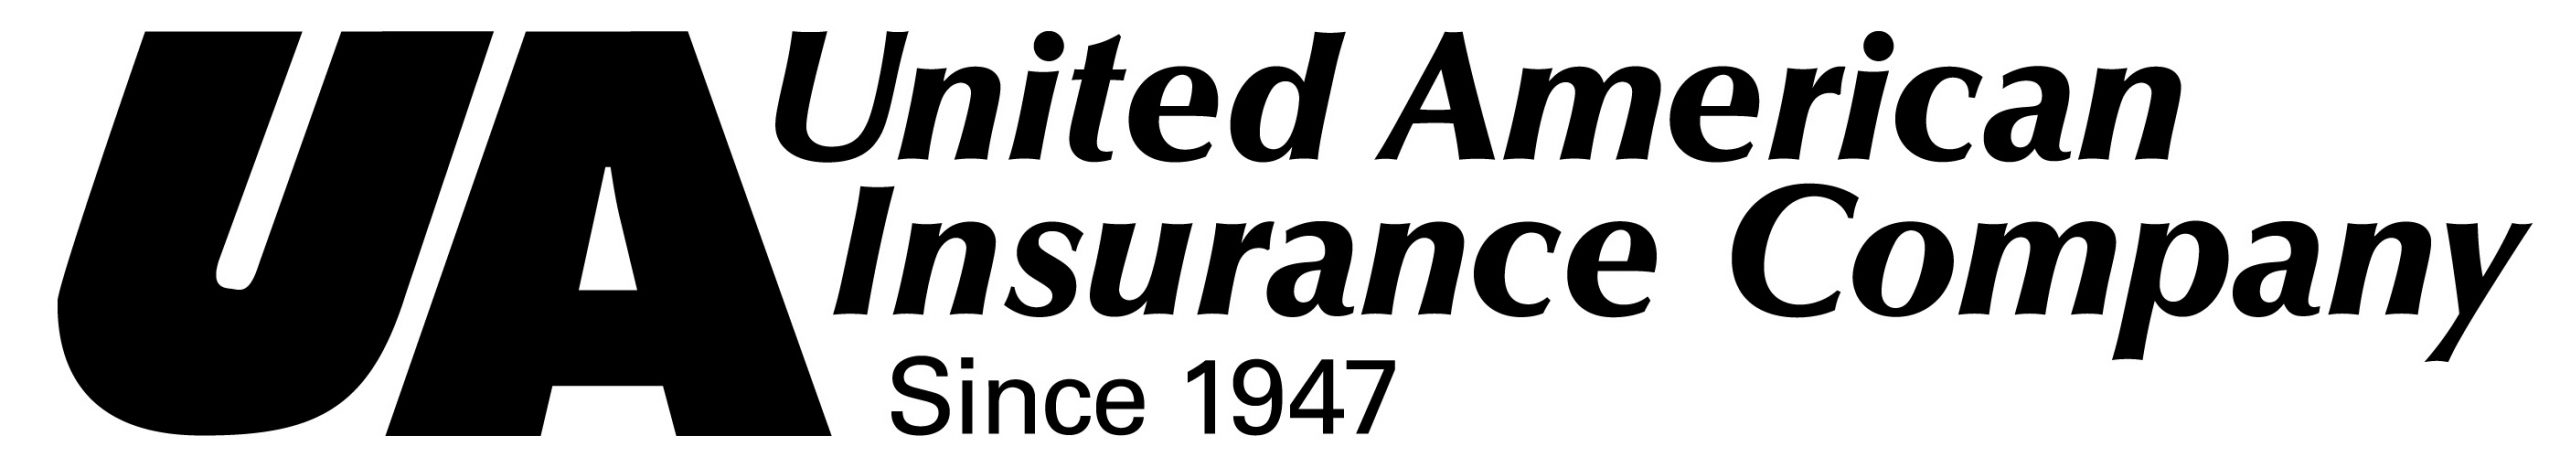 United American Insurance Company logo